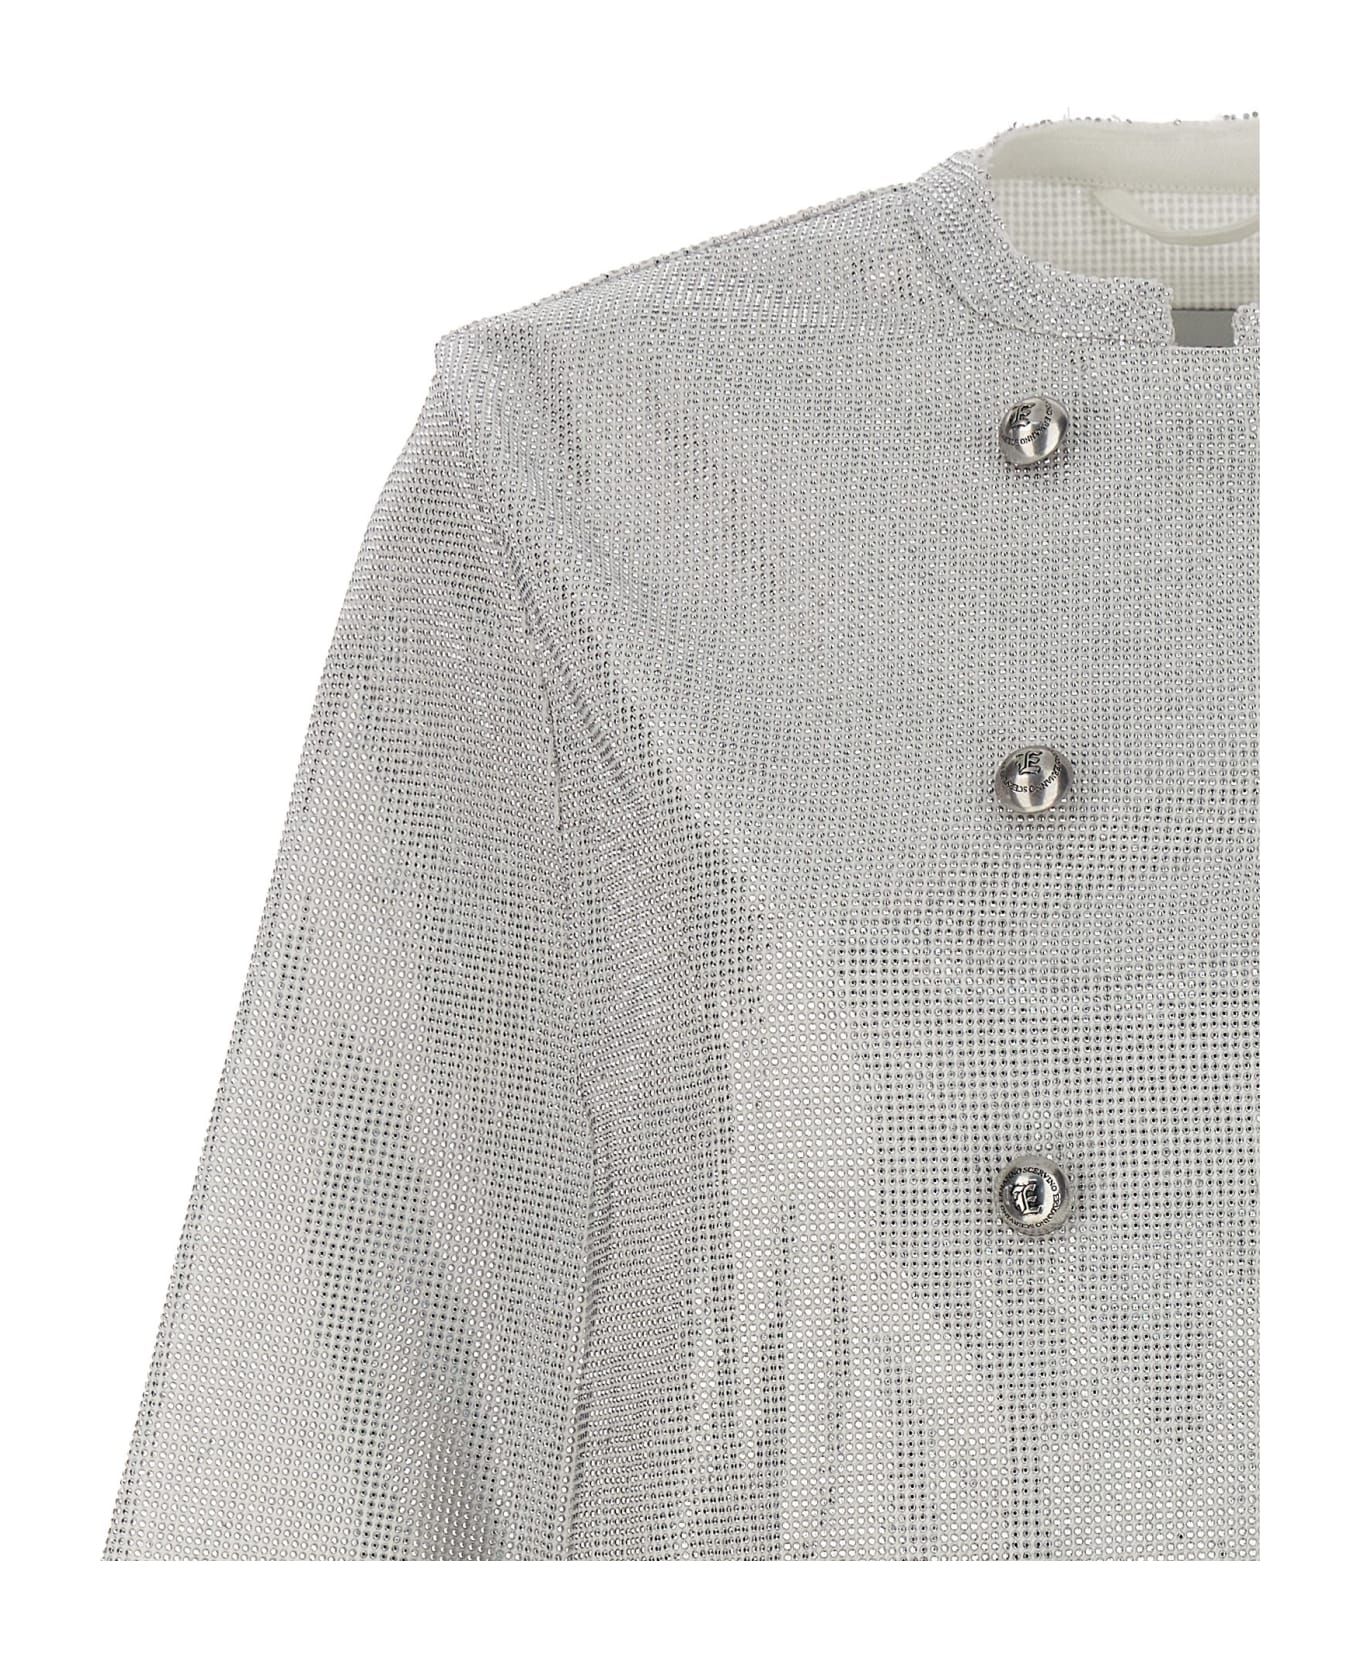 Ermanno Scervino Rhinestone Blazer Jacket - Silver